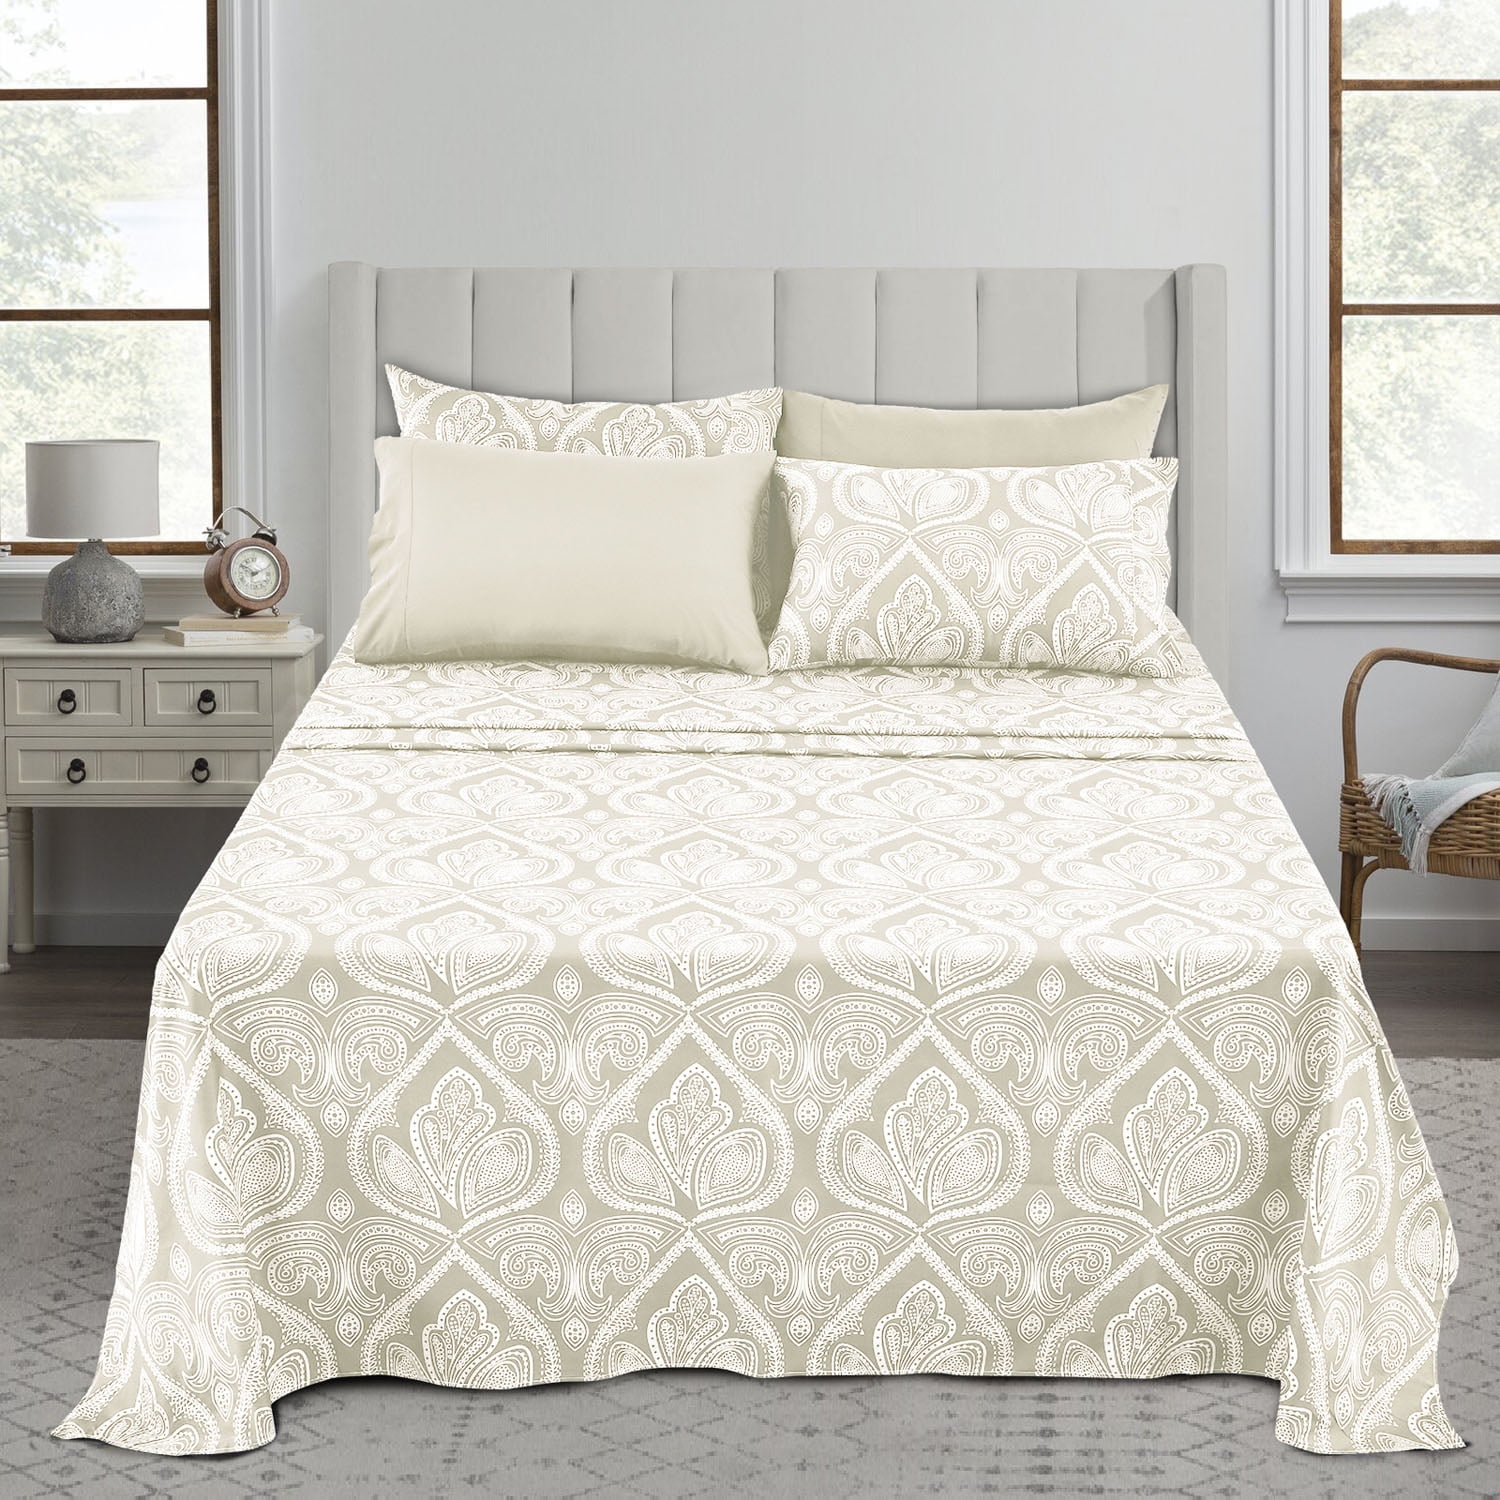 Details about   1000TC Single Premium Flat Bed Sheet Super Soft Egyptian Cotton Silver Color 